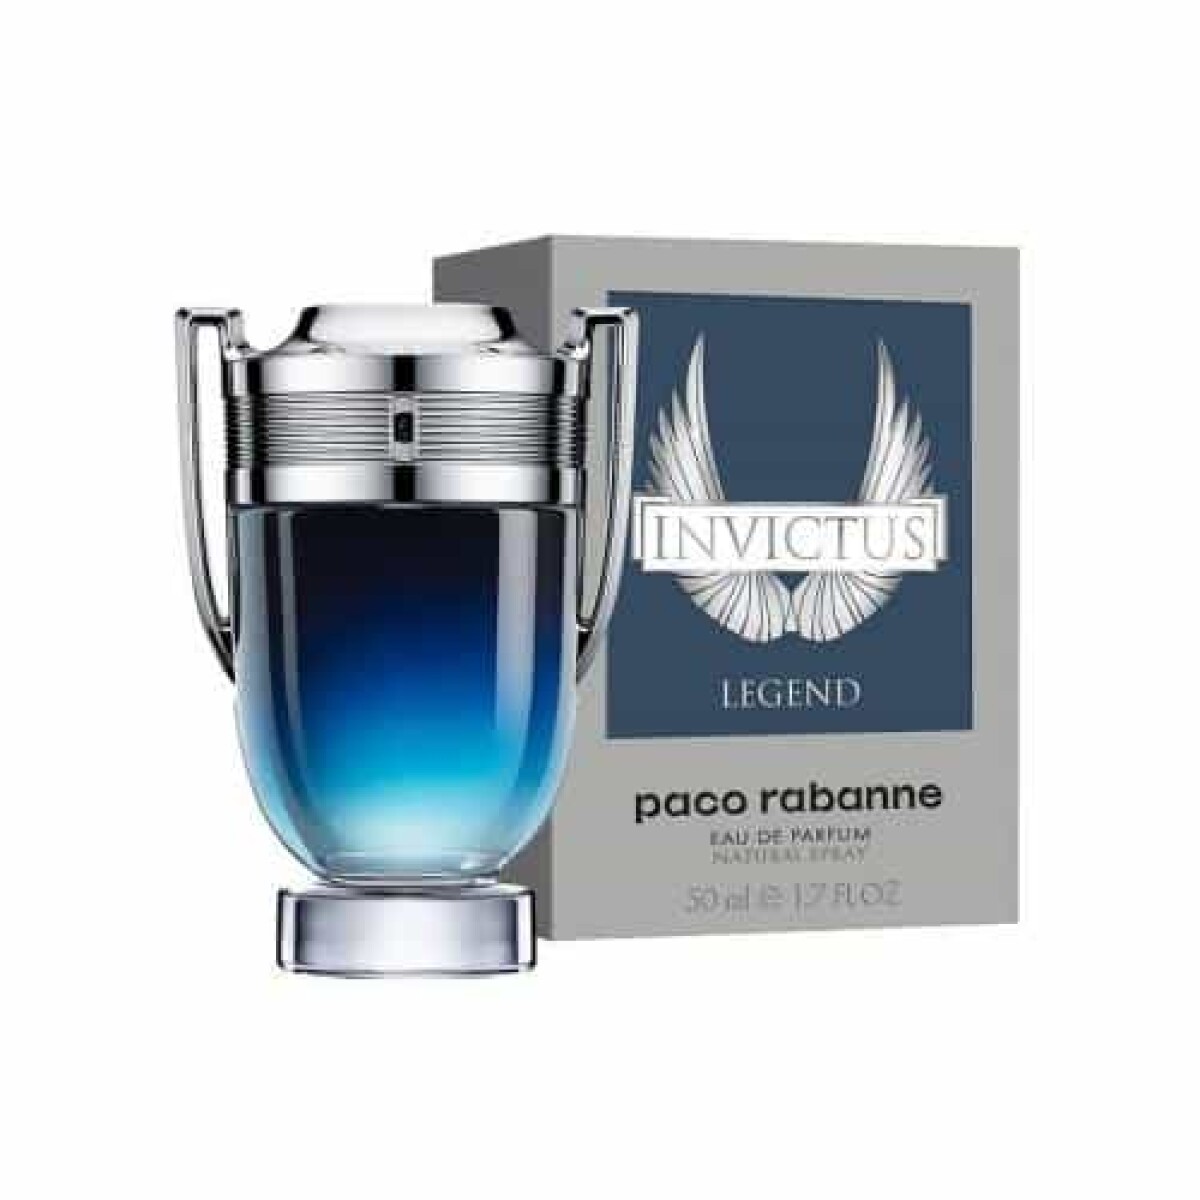 Perfume Paco Rabanne Invictus Legend Edp 50 ml 